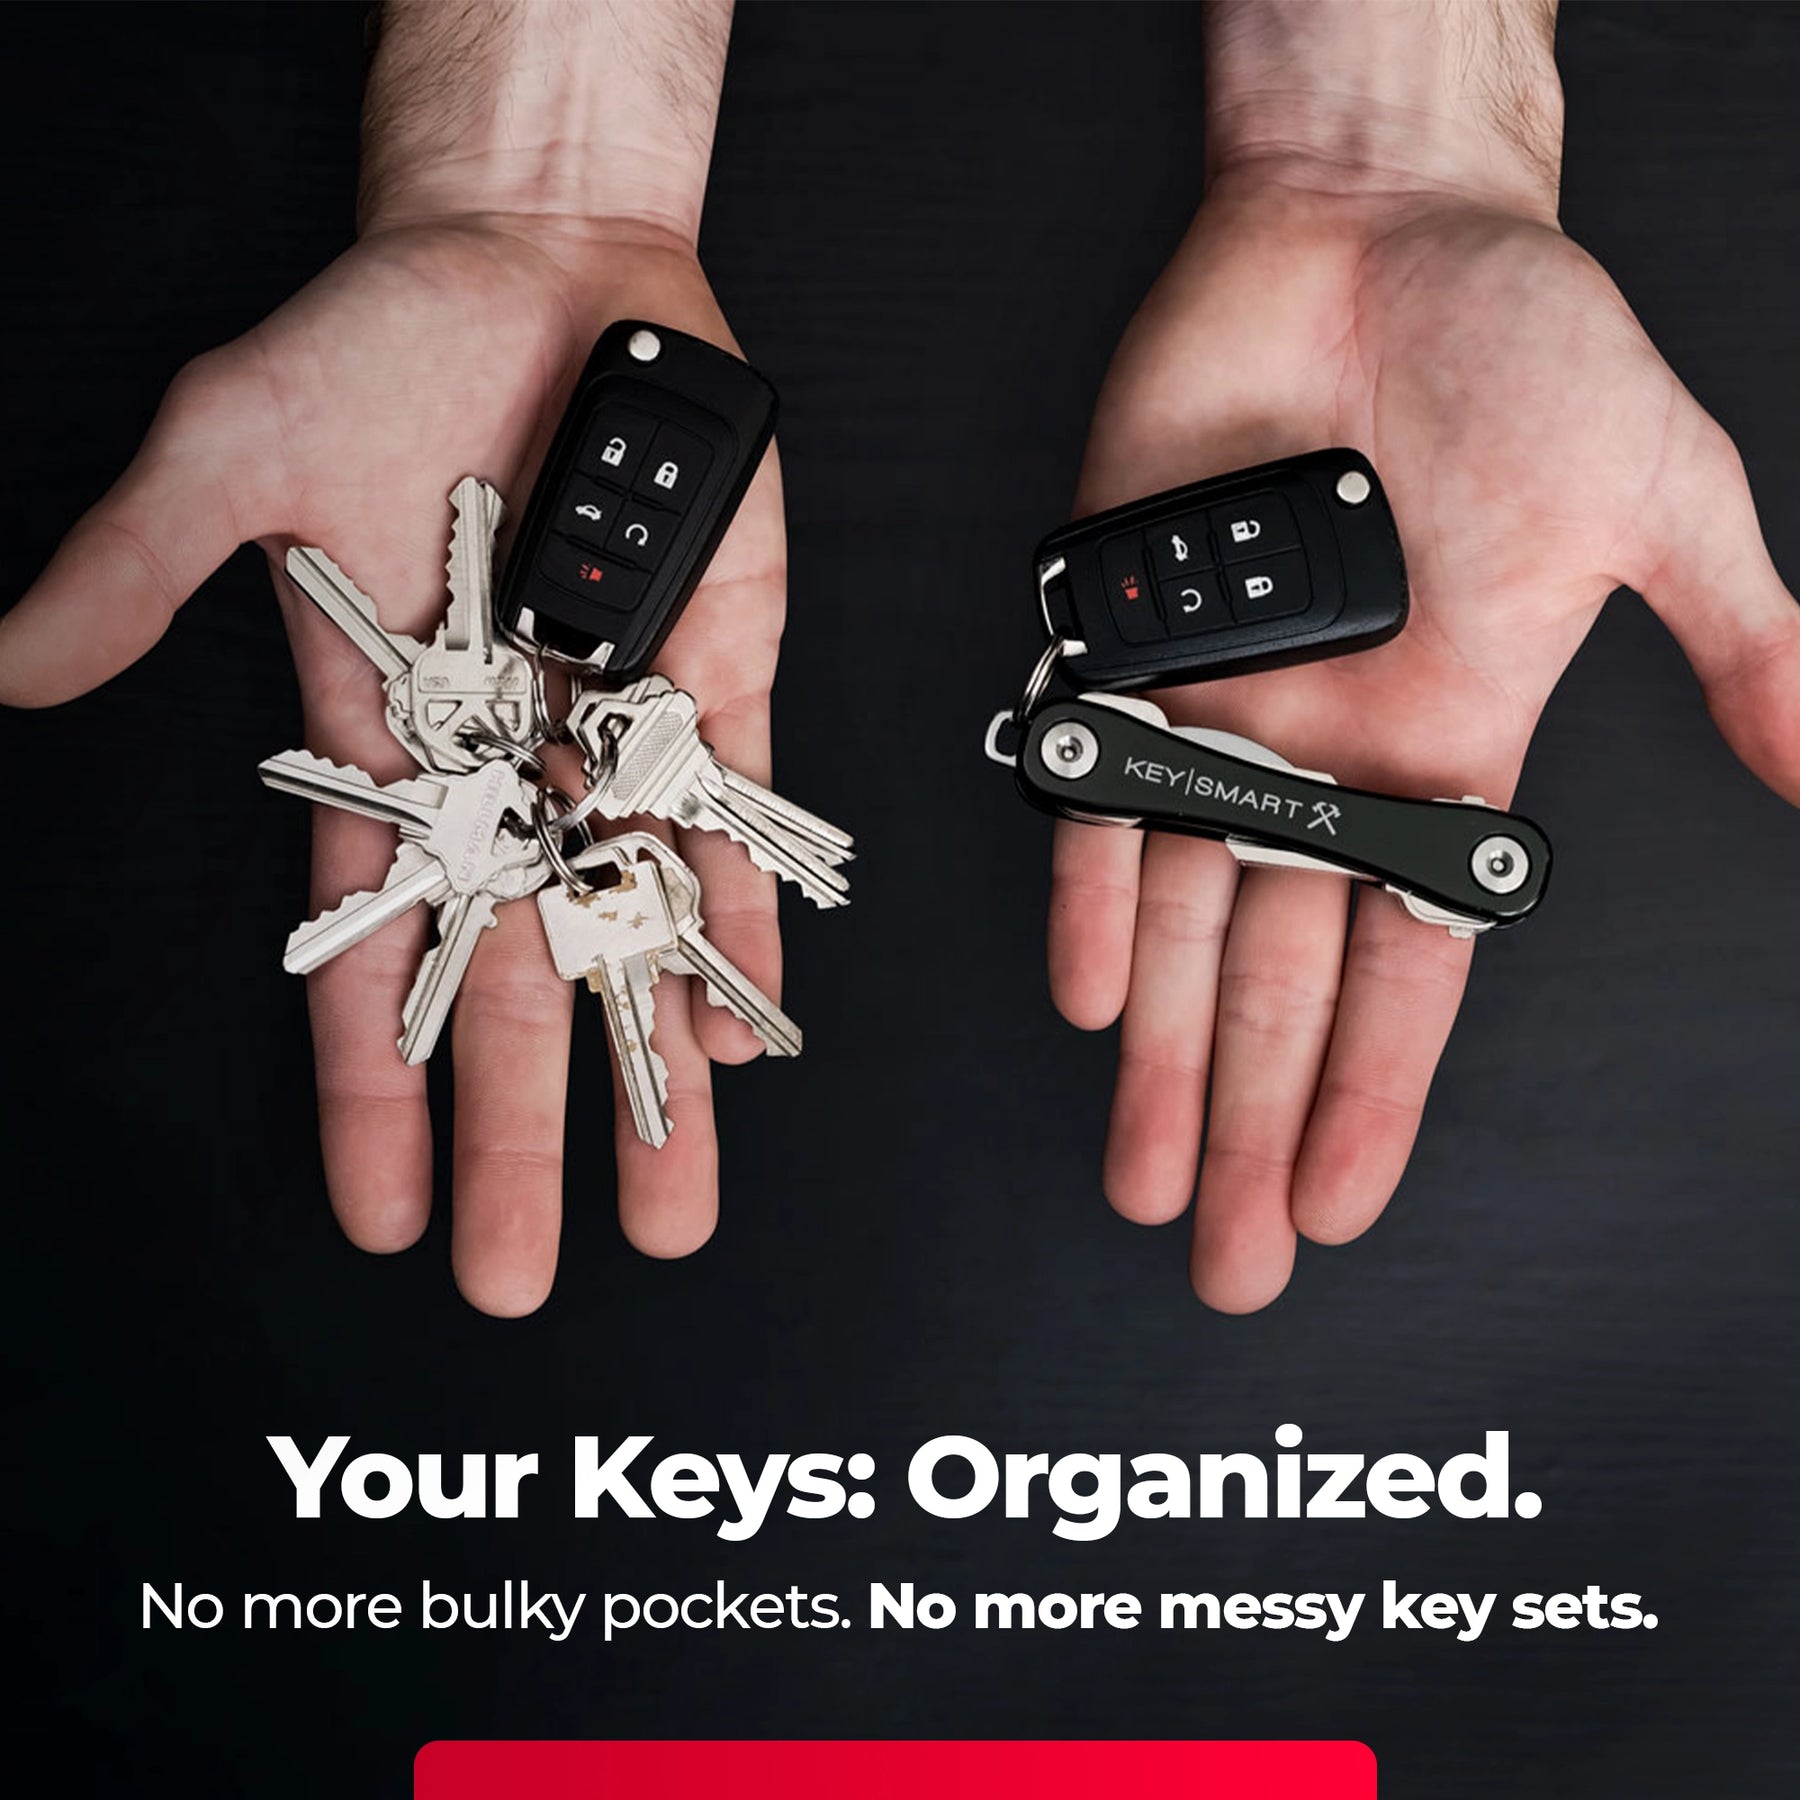 KeySmart Compact Key Holder